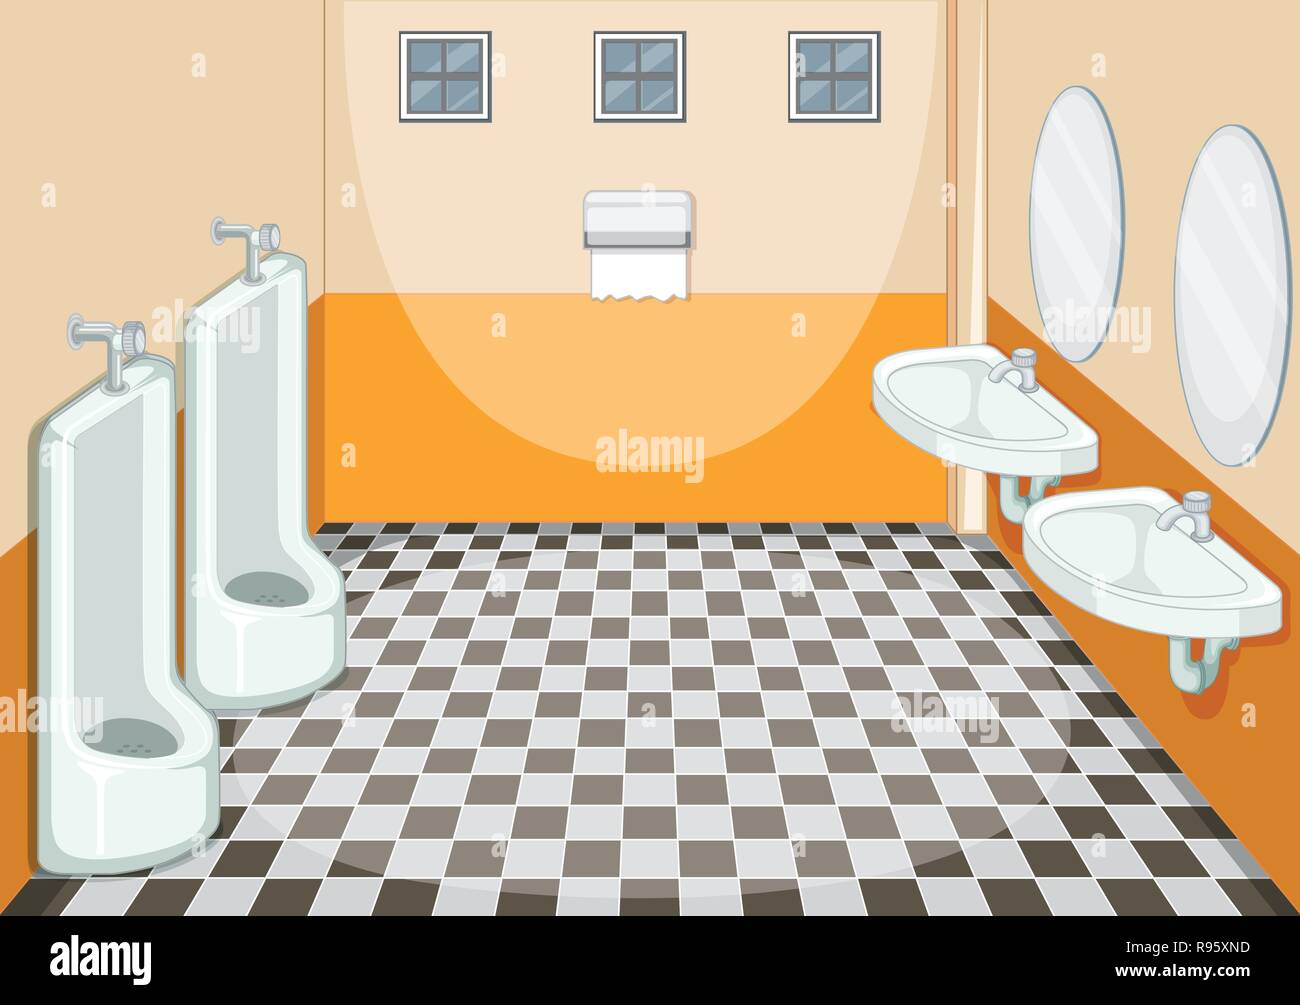 Interior design of male toilet illustration Stock Vector